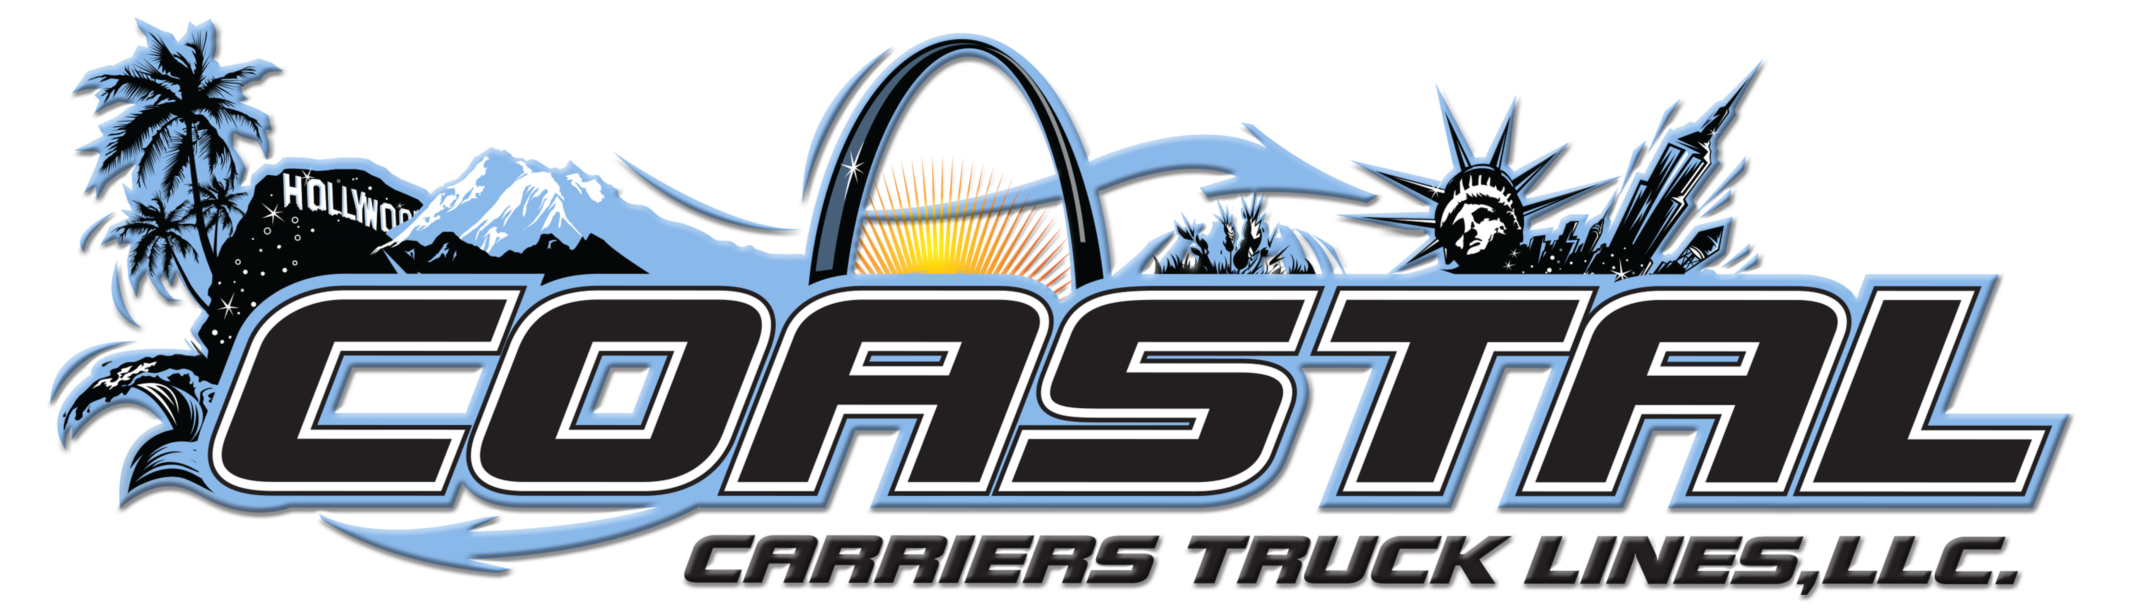 Coastal Carriers Truck Lines, LLC. logo